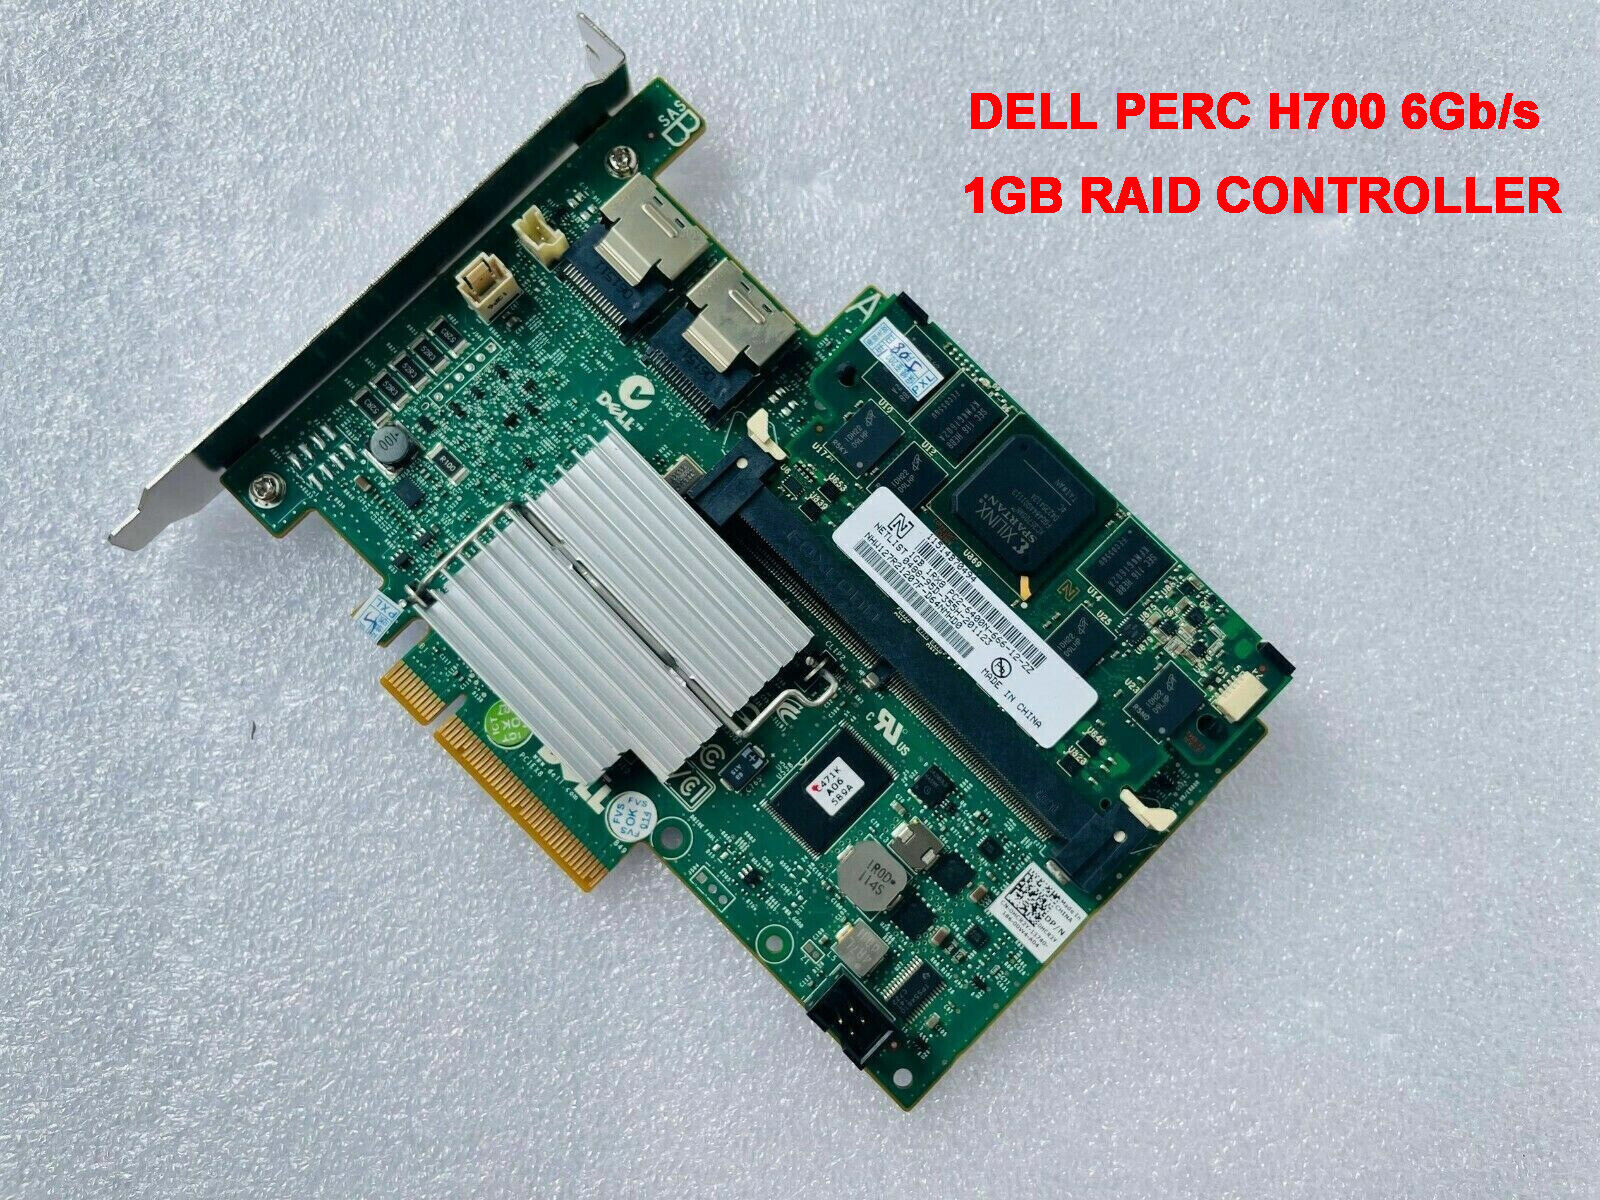 DELL PERC H700 6Gb/s 1GB RAID CONTROLLER for R510 R610 R710 R810 R910 90%NEW